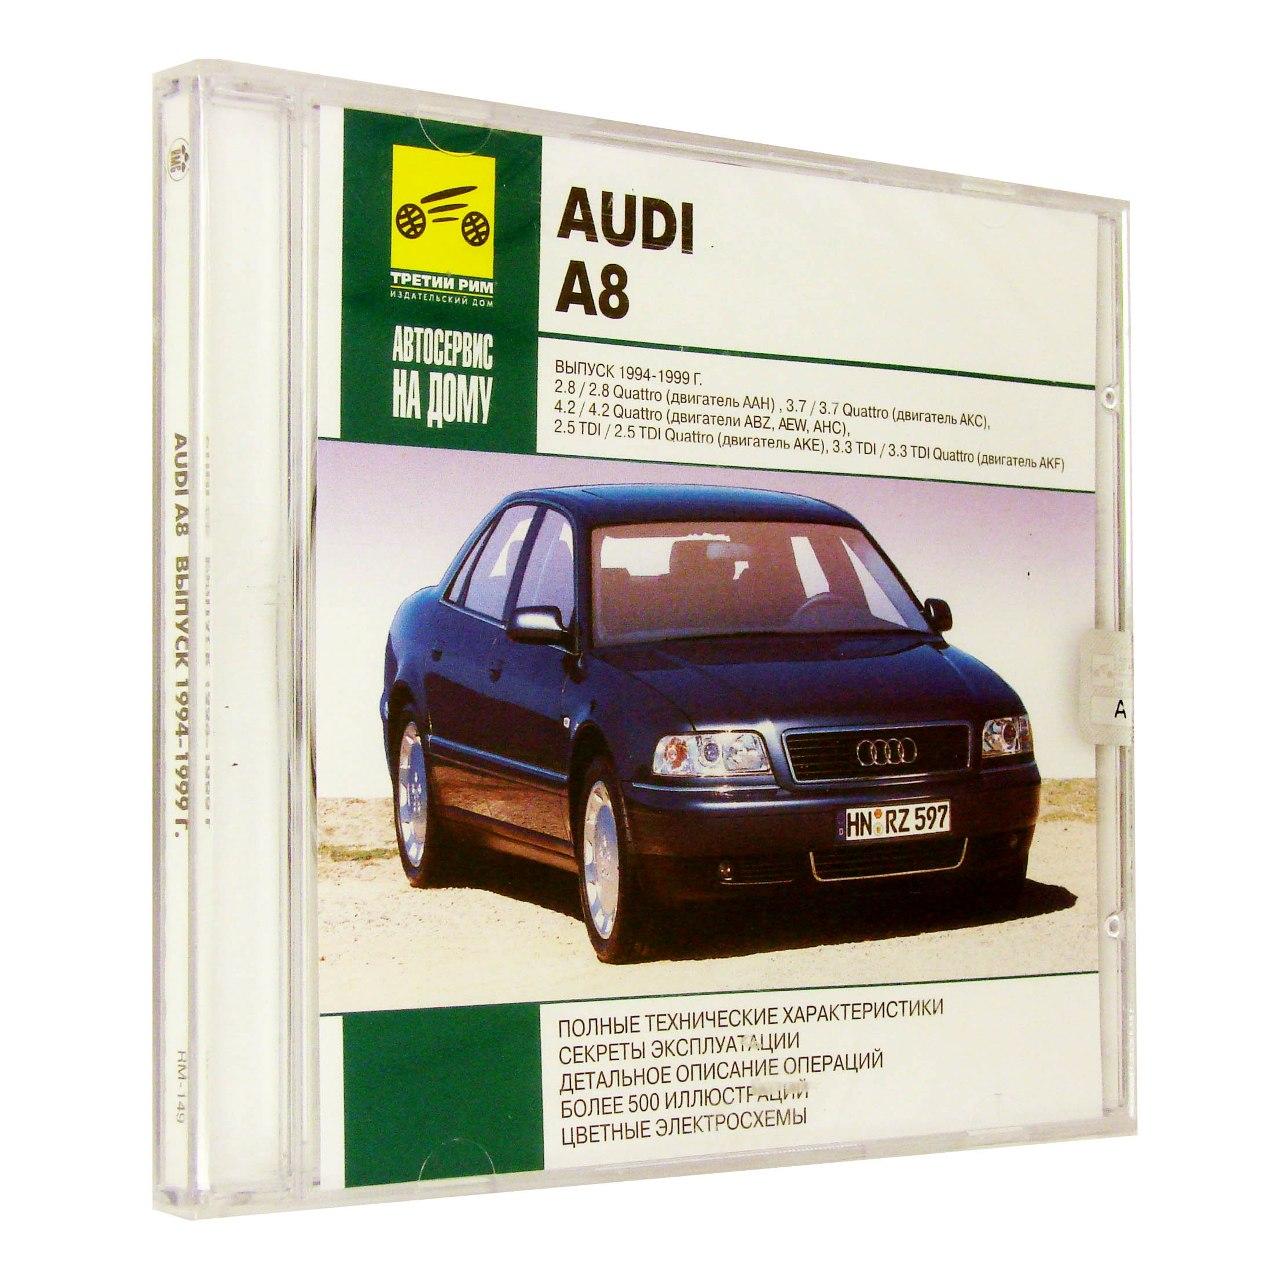 Компьютерный компакт-диск AUDI A8: Автосервис на дому (ПК), фирма "RMG Multimedia", 1CD